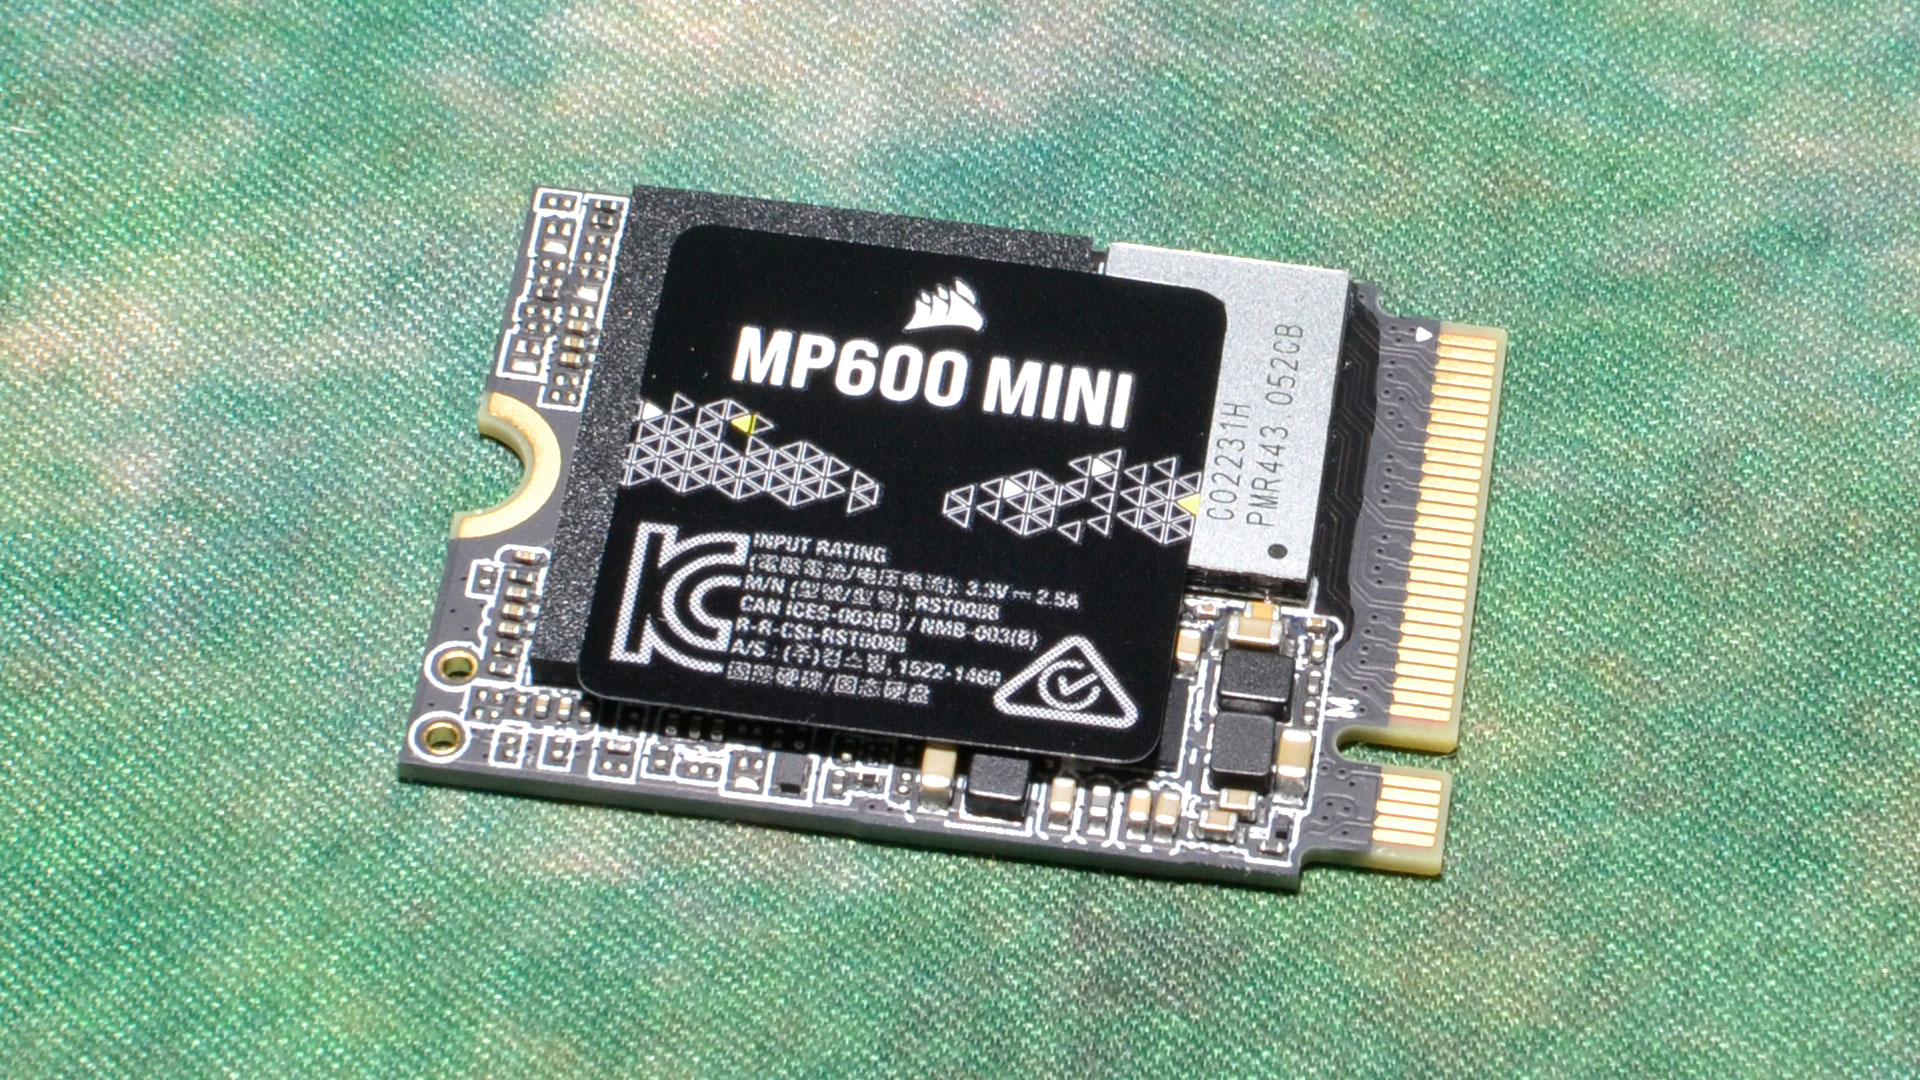 Corsair MP600 Mini 1TB SSD Review: Corsair's Foray into M.2 2230 Storage